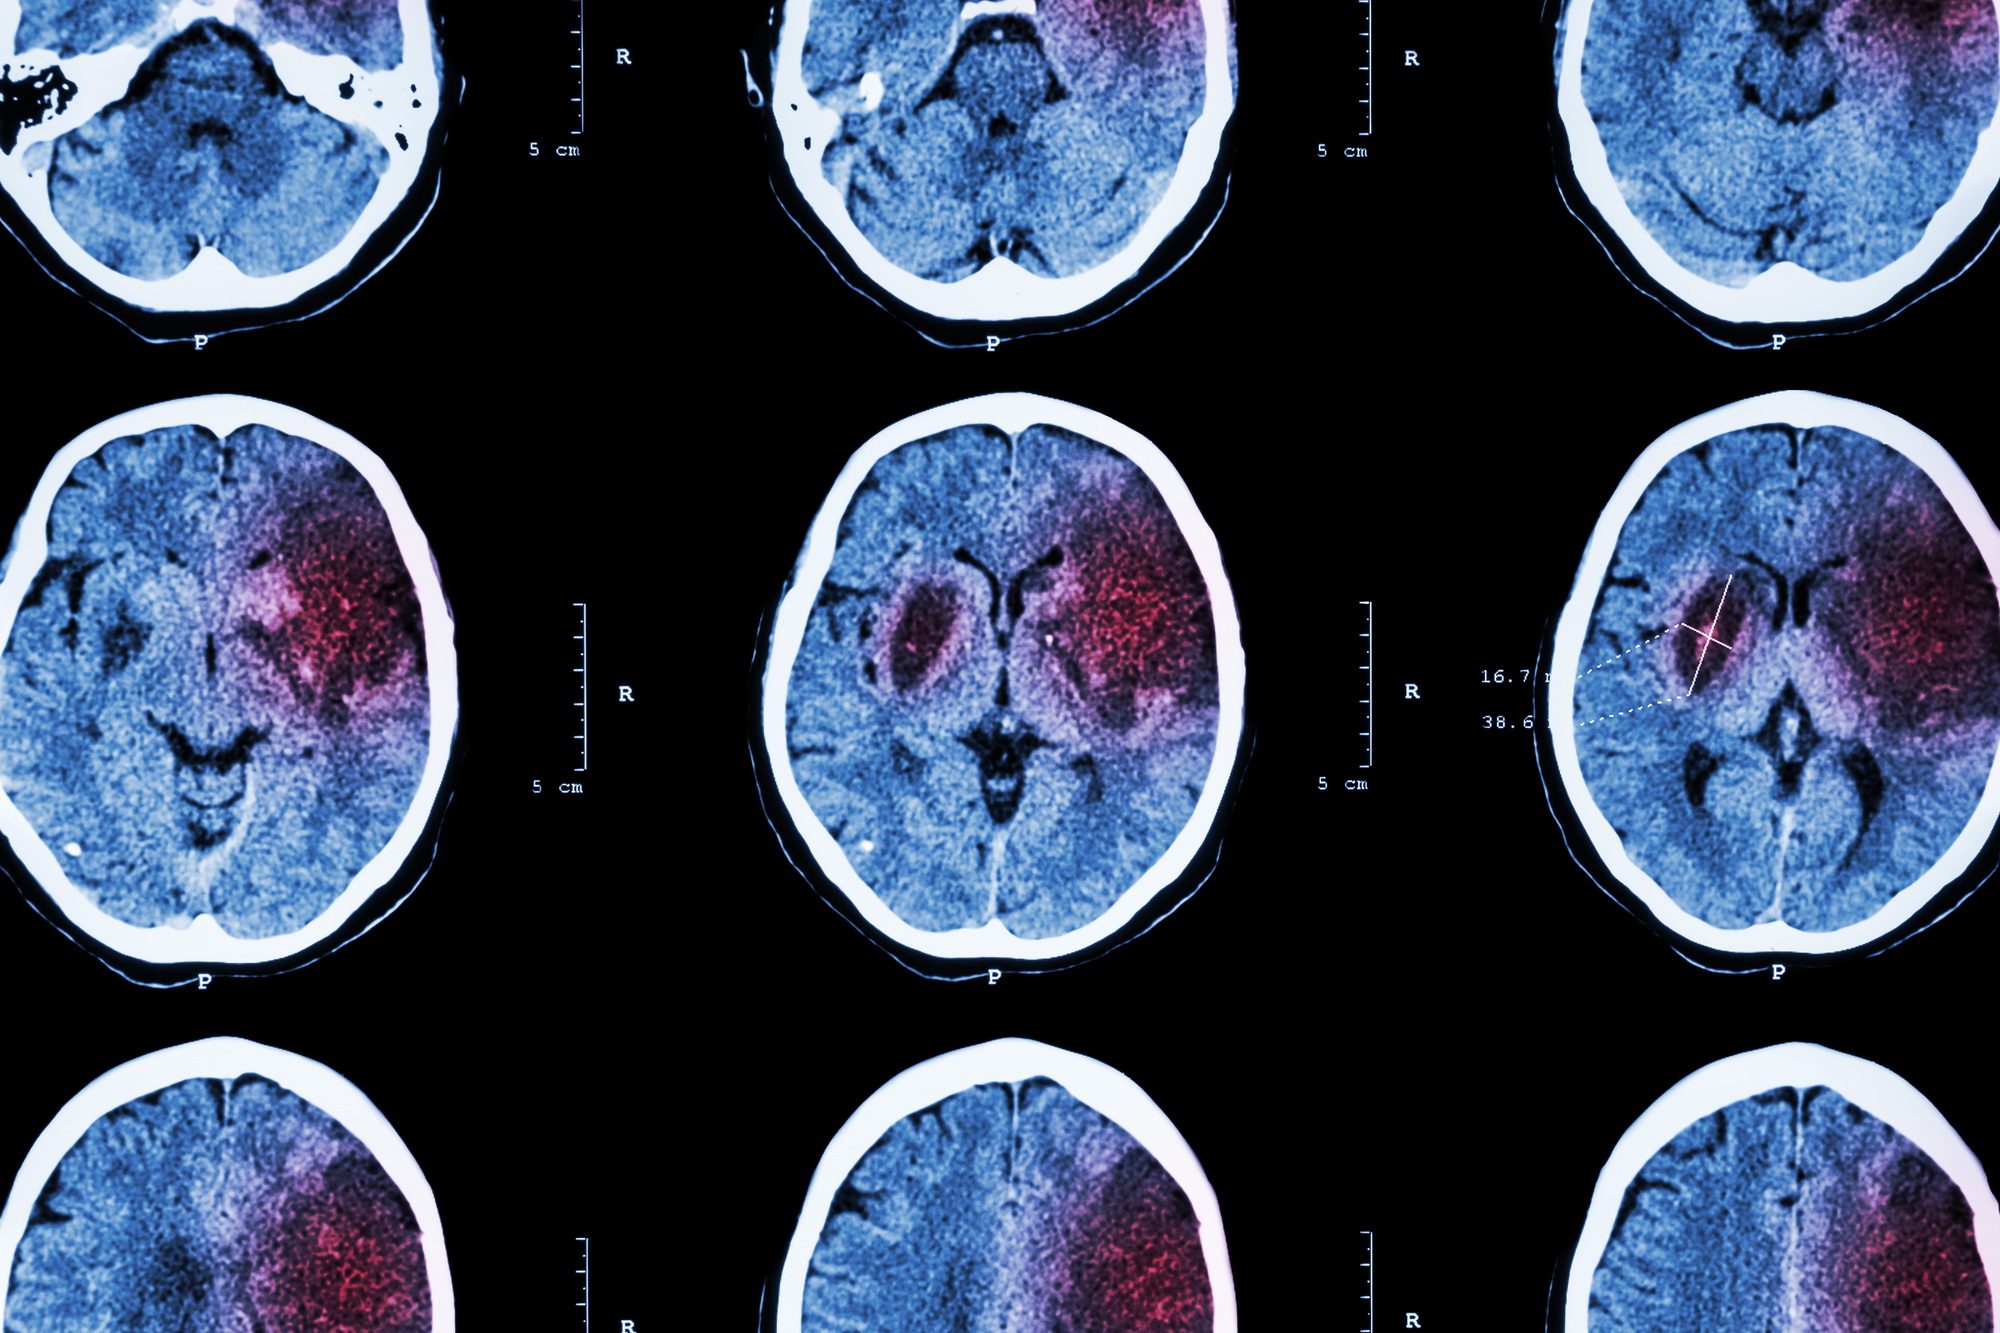 Ischemic stroke. CT scan of brain showing cerebral infarction